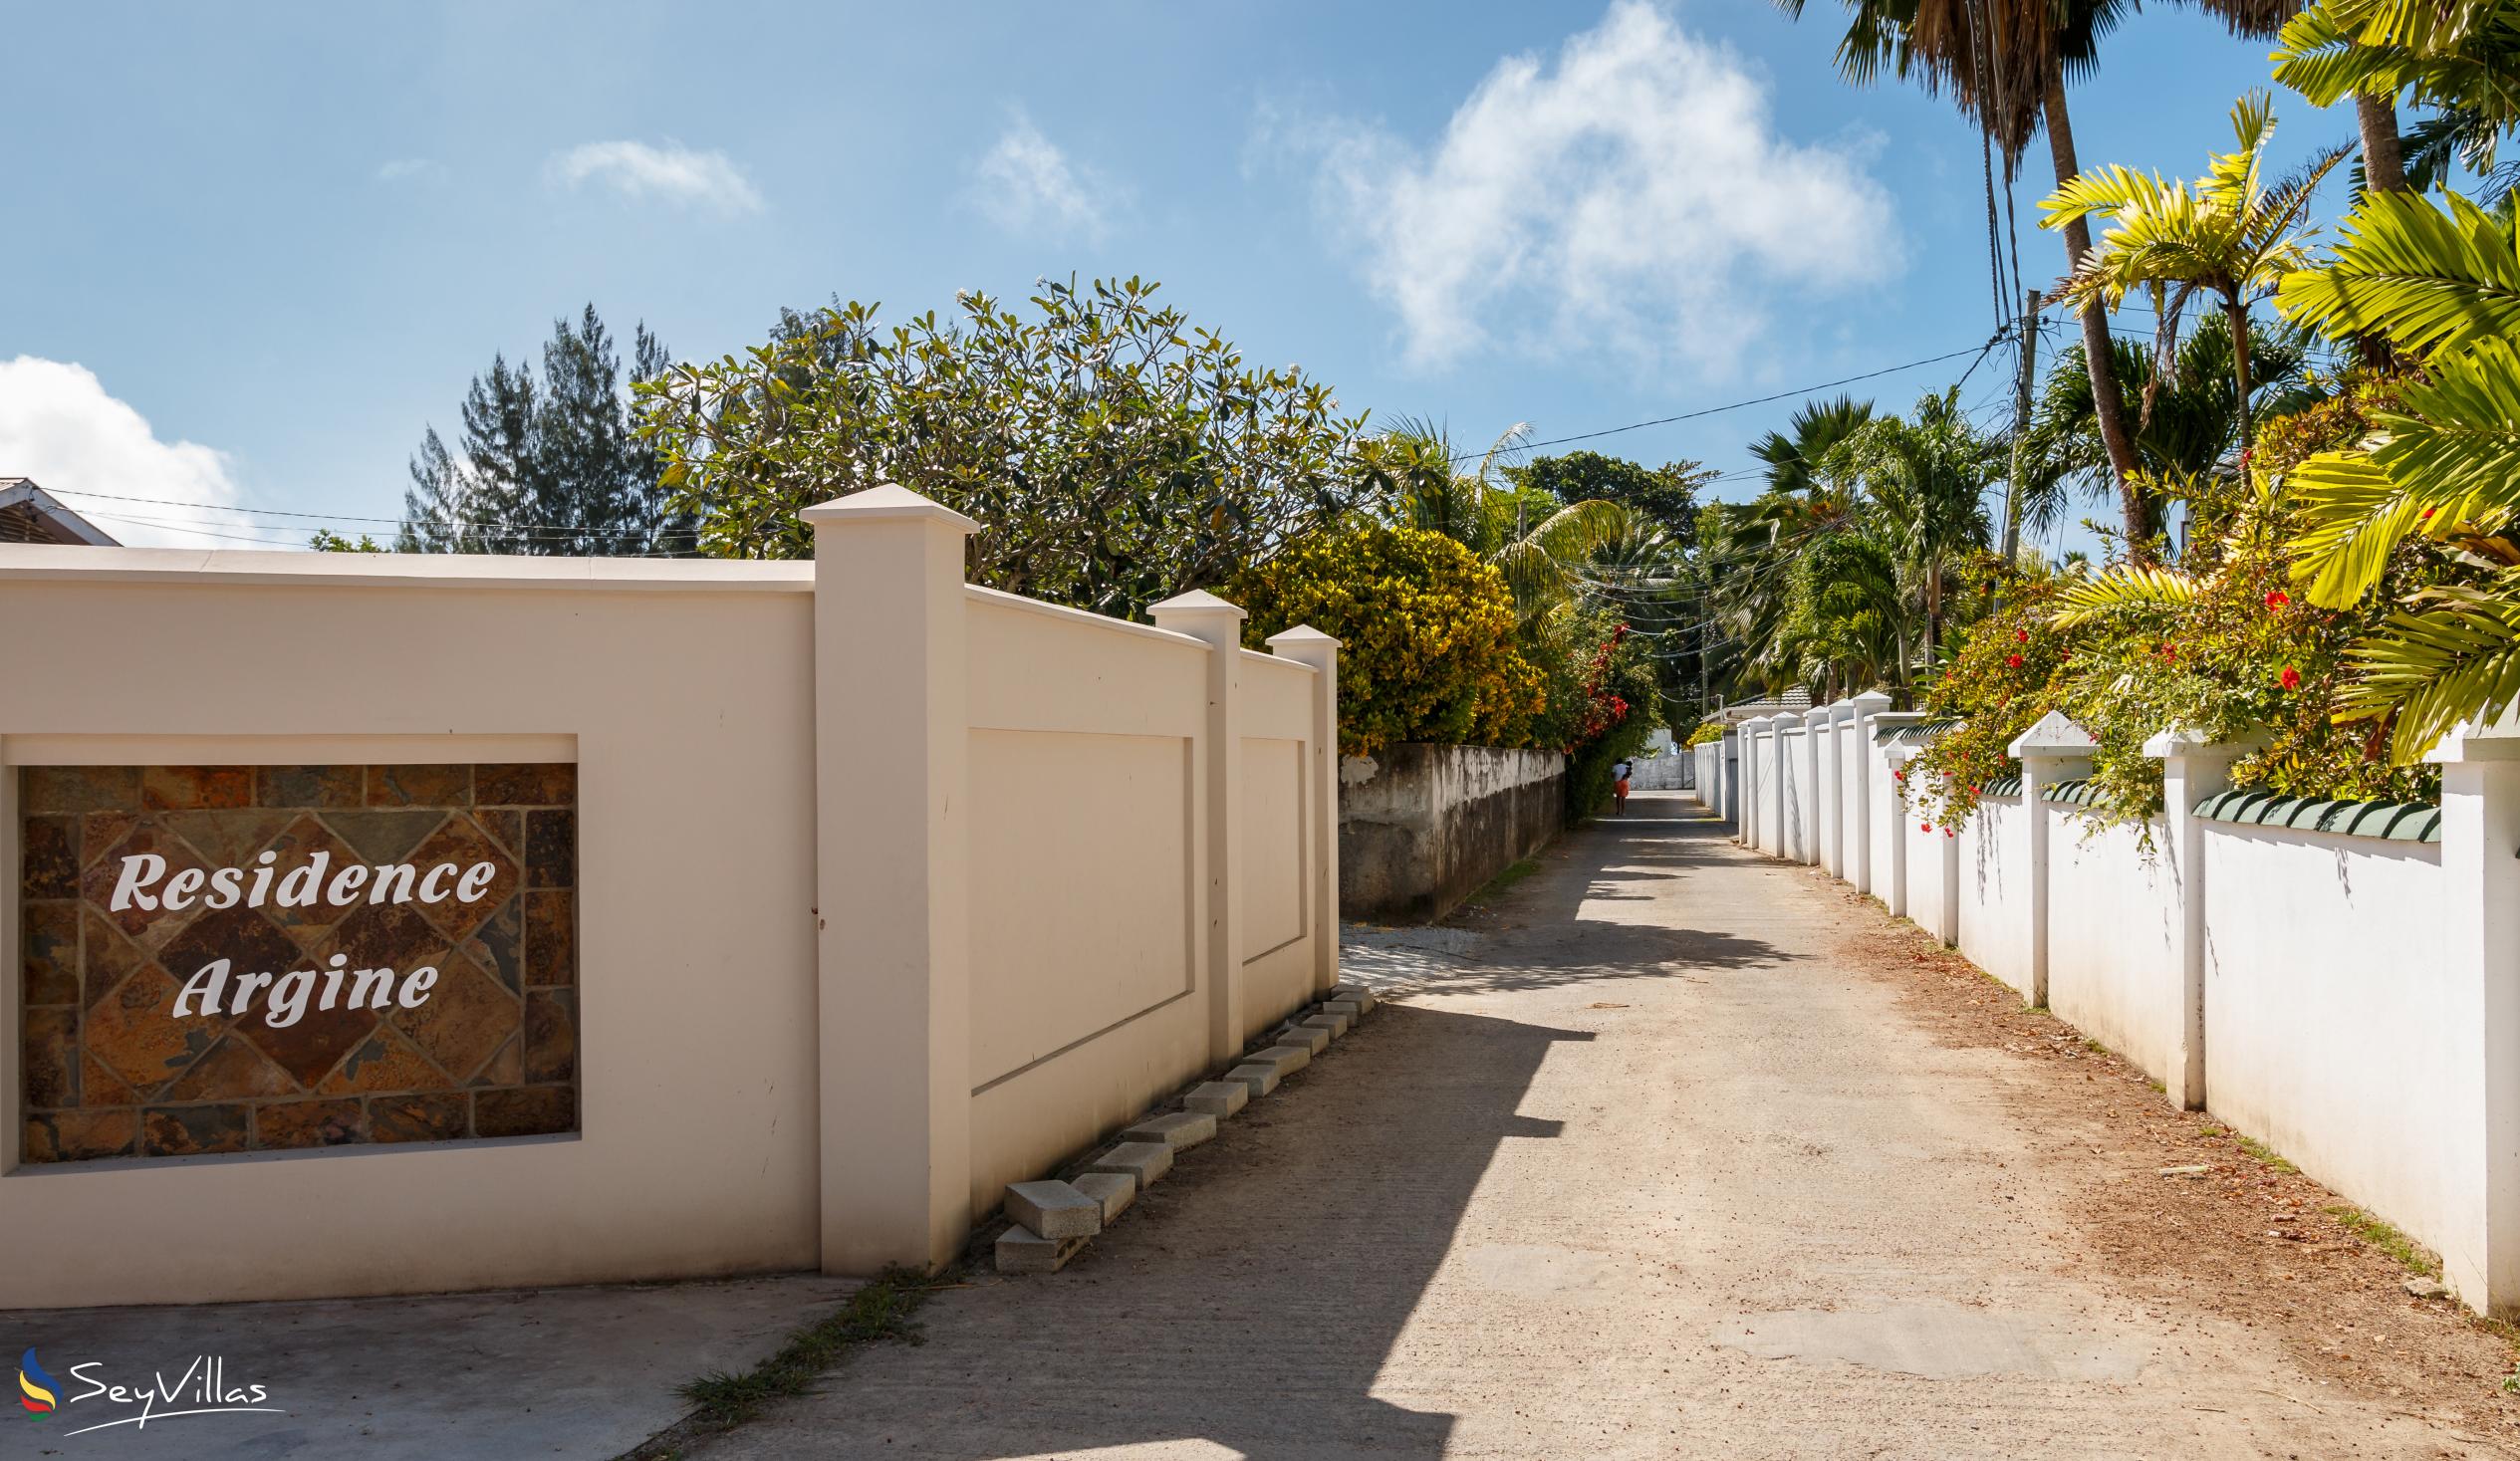 Foto 24: Residence Argine - Posizione - Mahé (Seychelles)